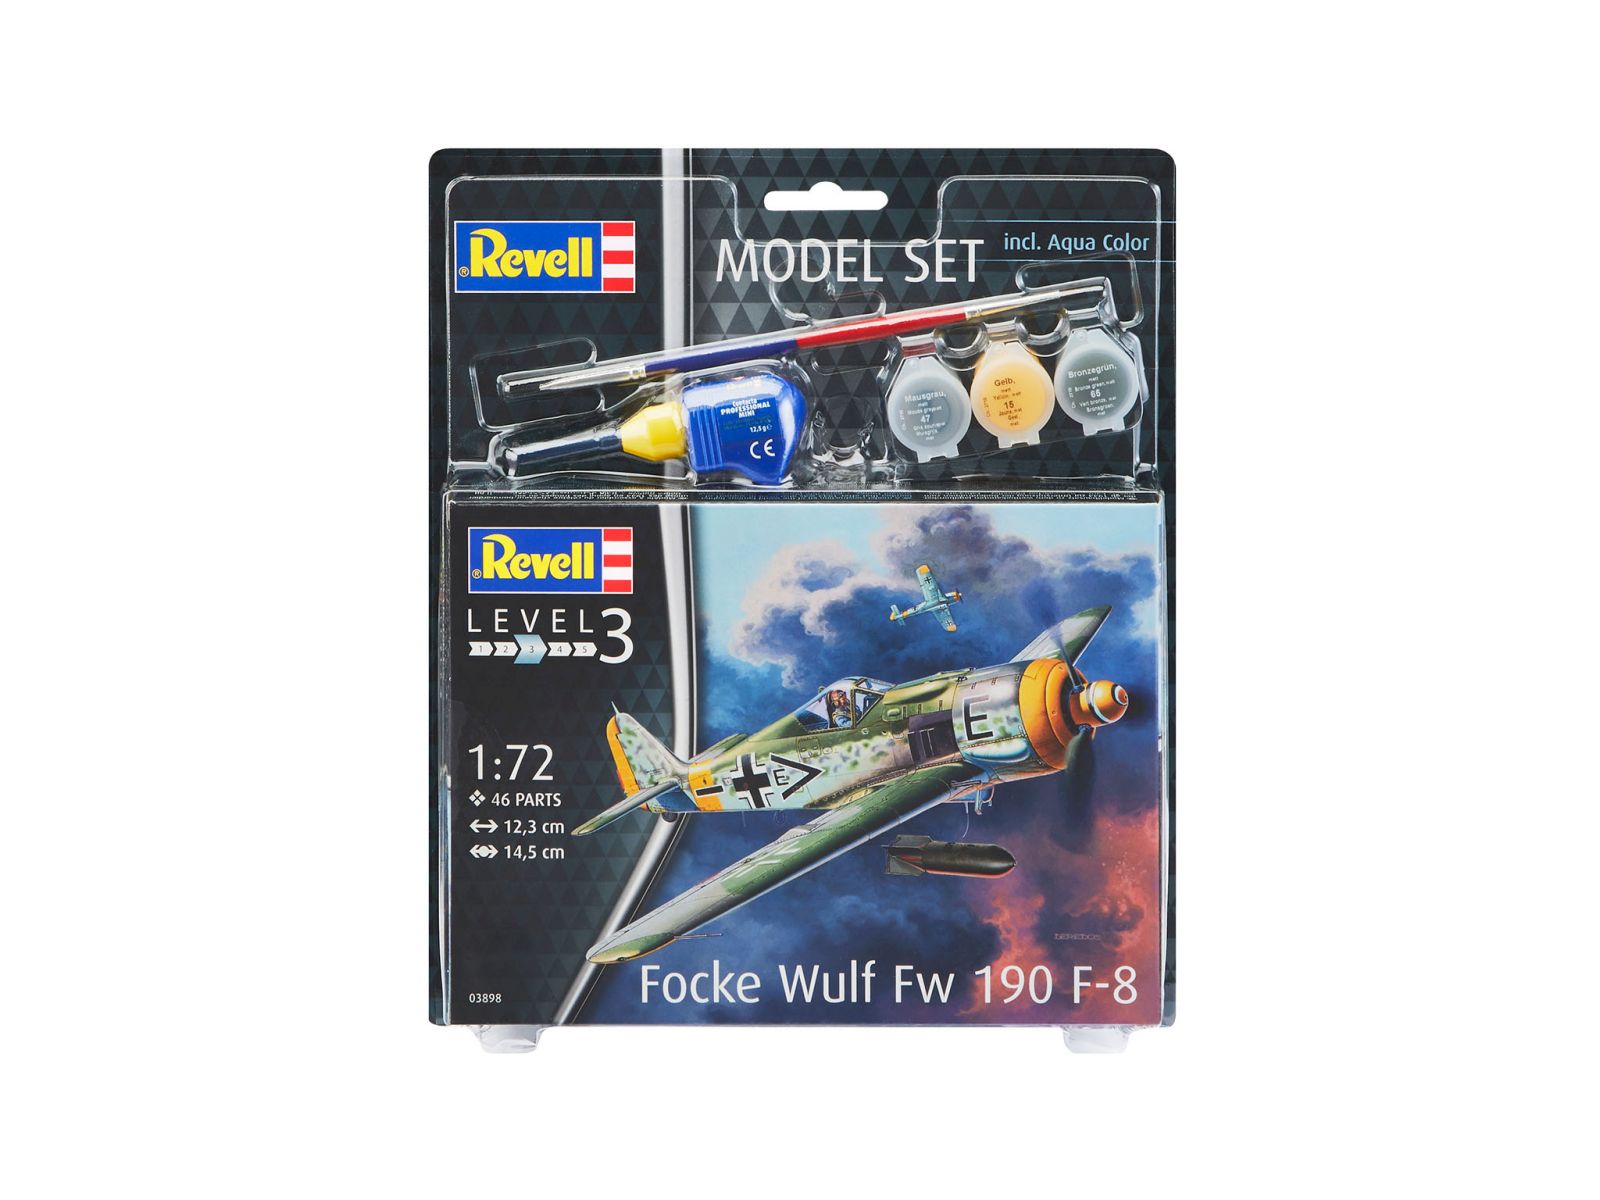 Revell 63898 - Model Set Focke Wulf Fw190 F-8